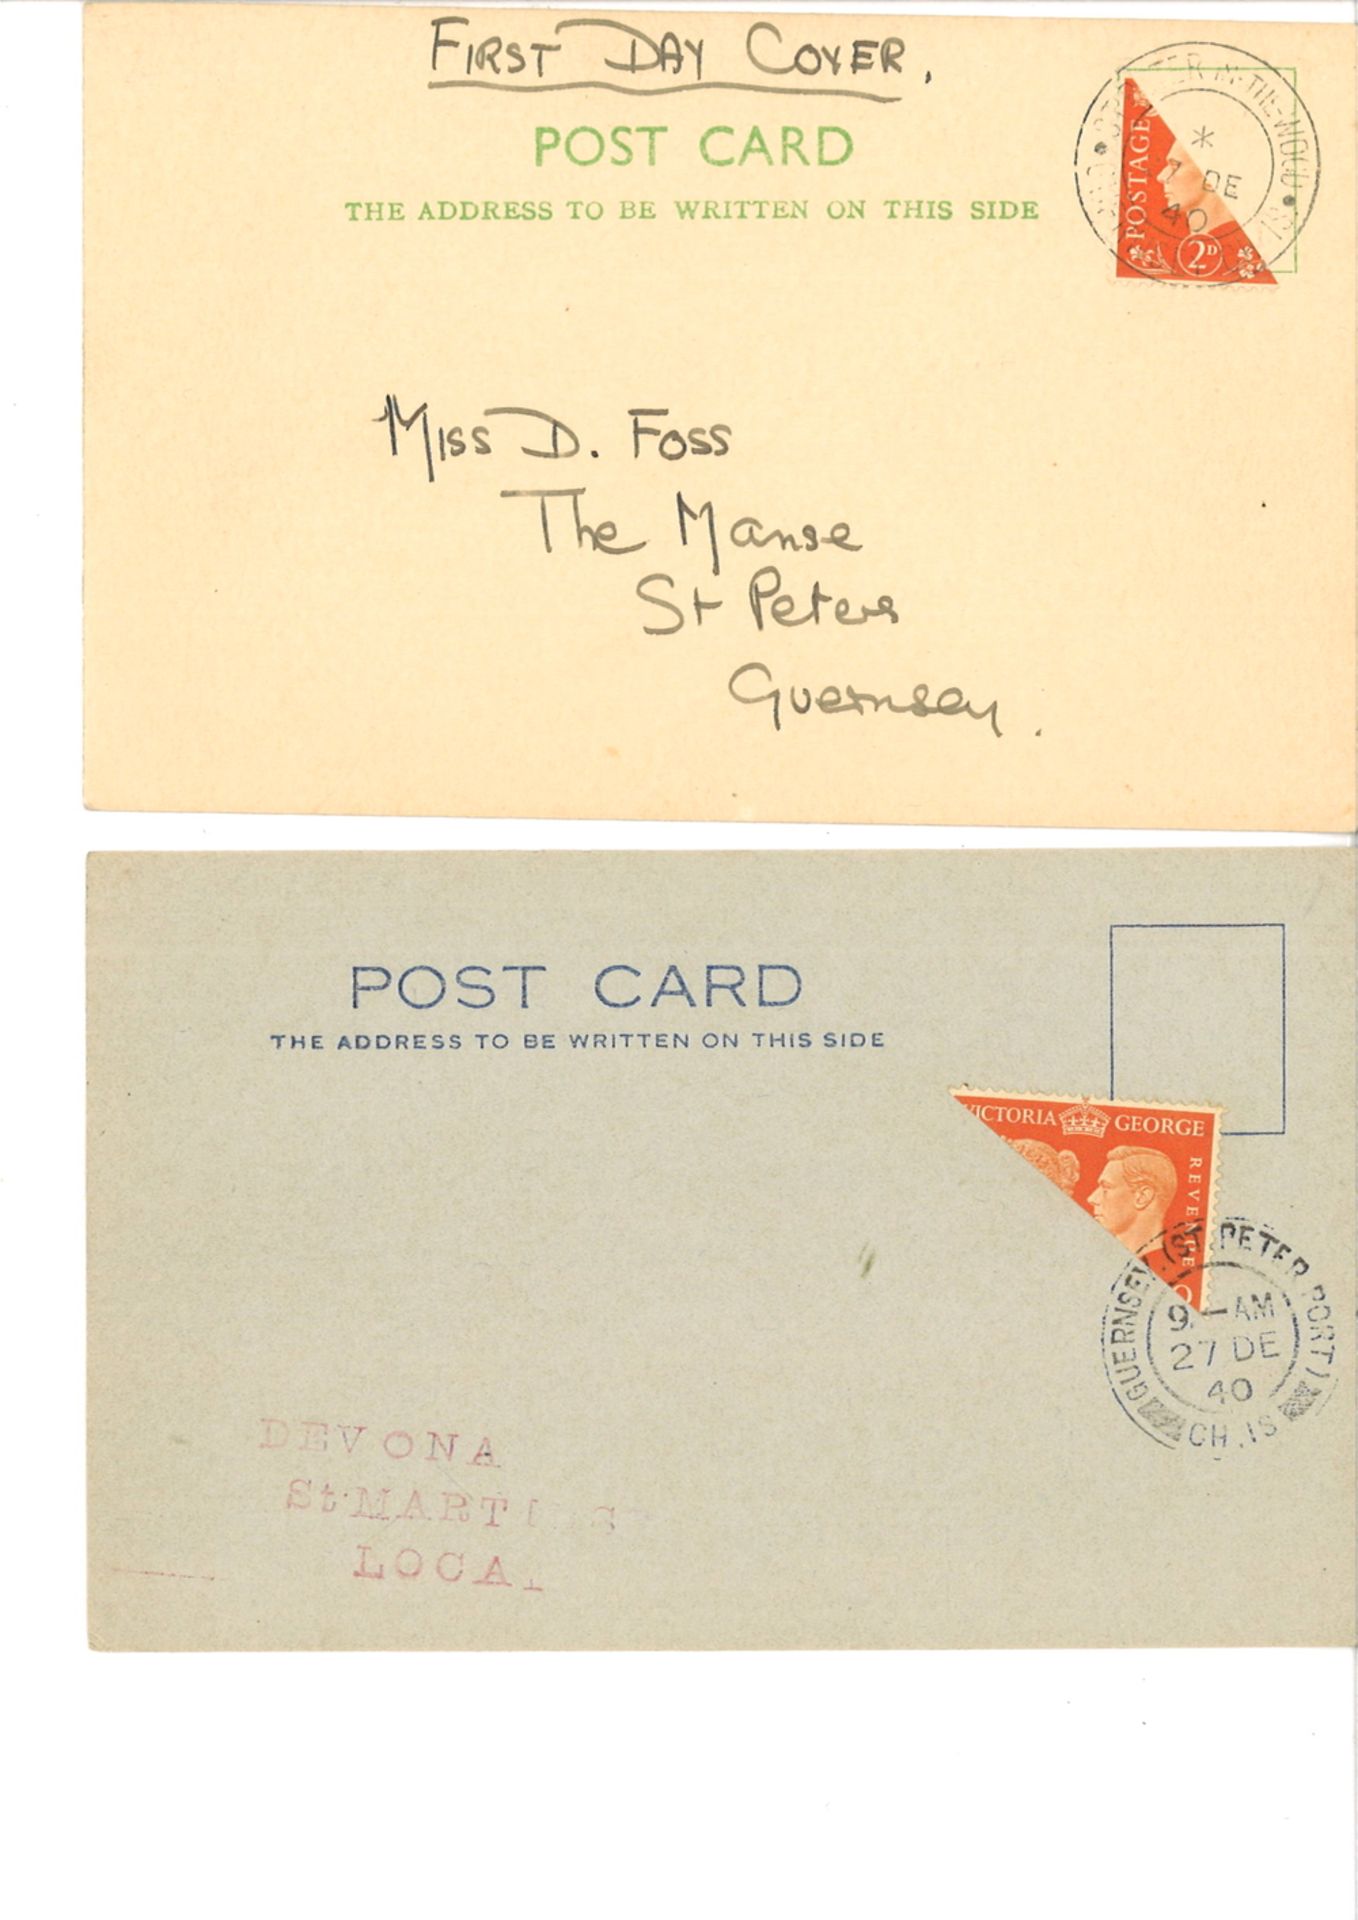 2 Postkarten Guernsey, gelaufen 27. Dezember 1940. 1x First Day Cover